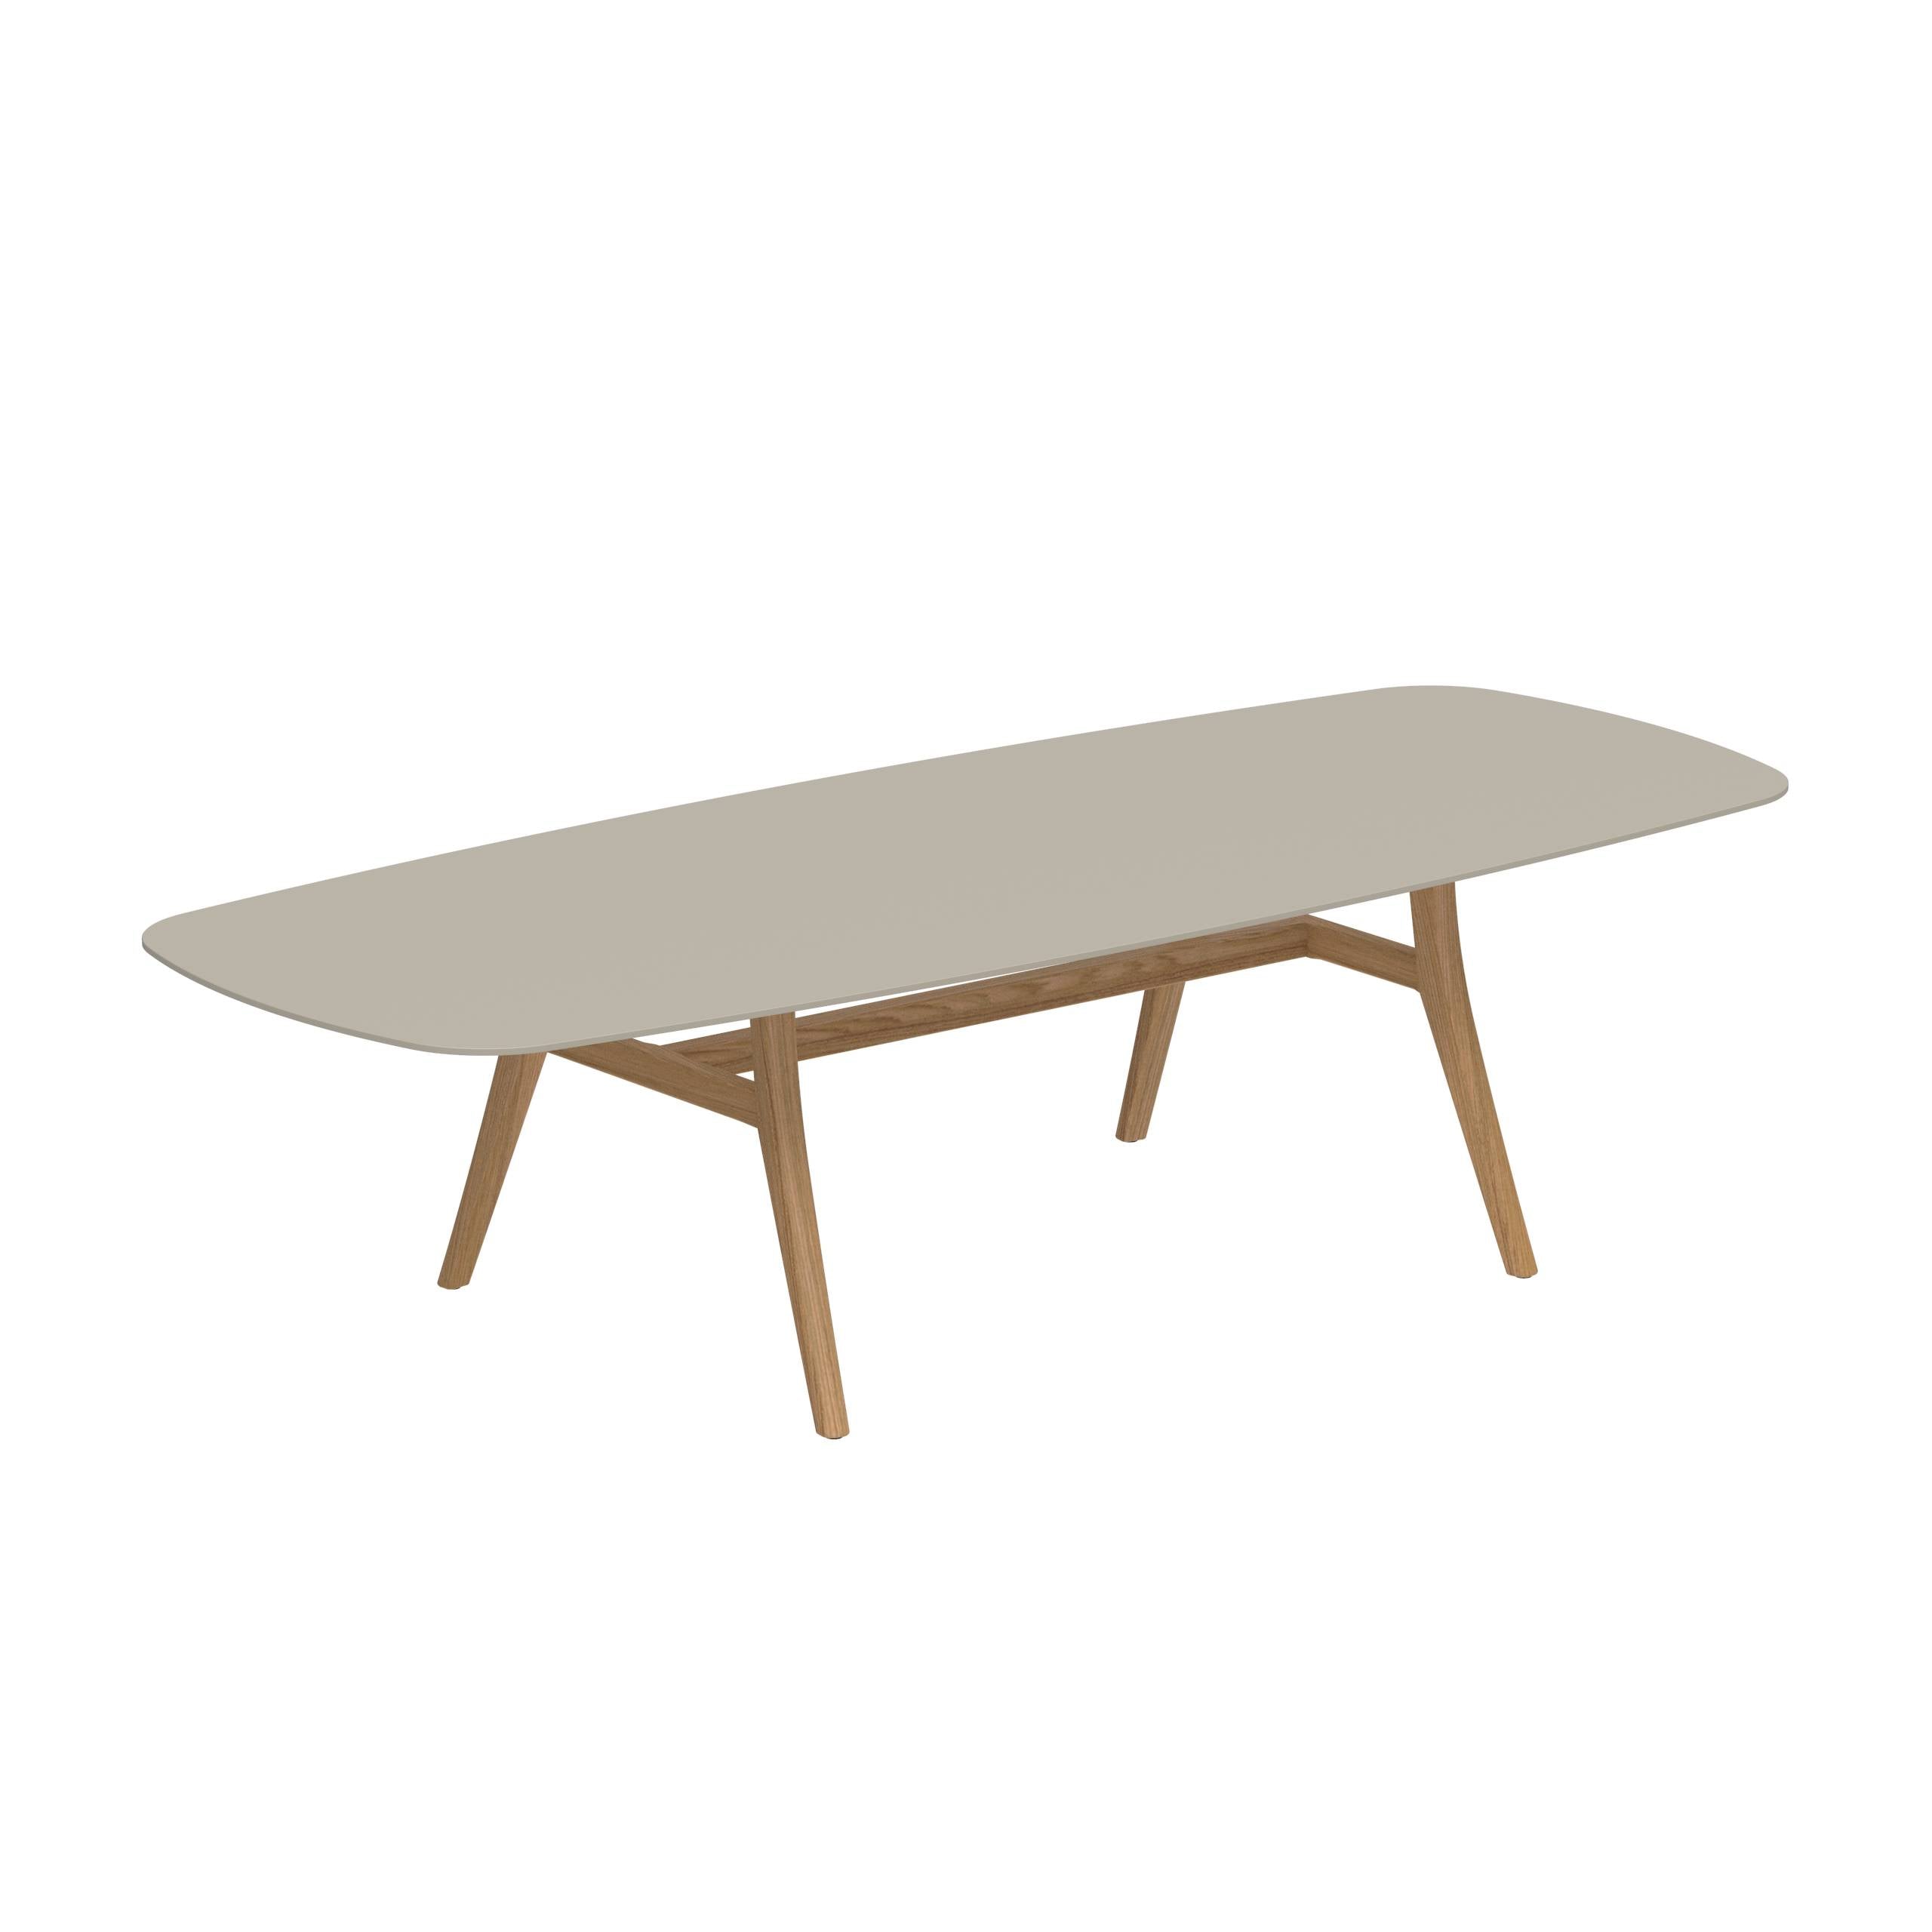 Zidiz Table 300x120cm Ceramic Pearl Grey